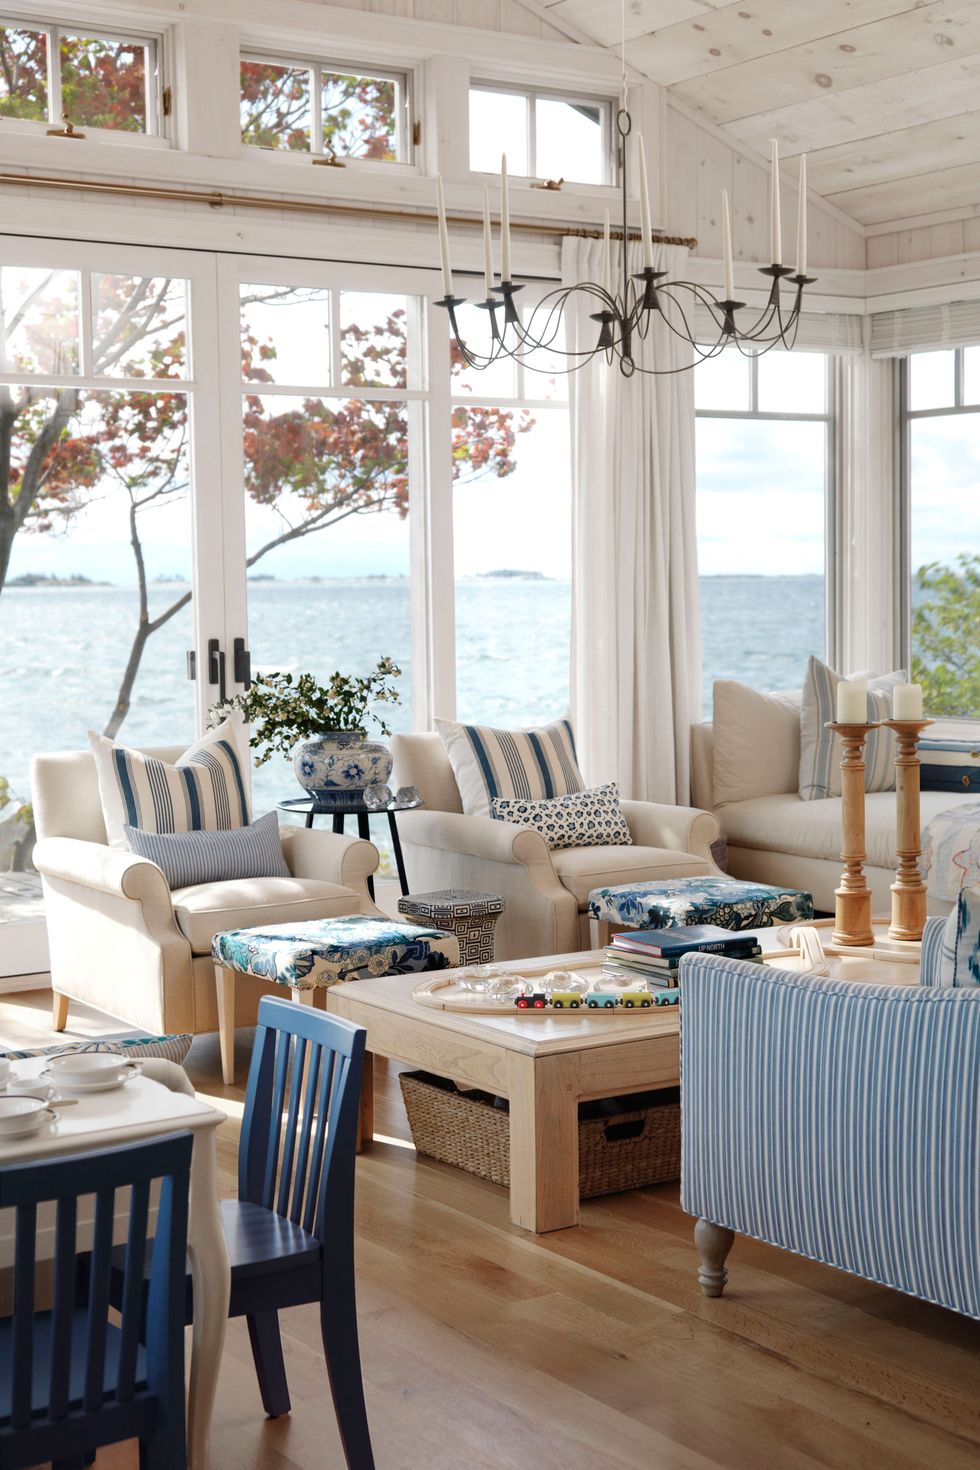 Coastal Style - Decor Inspiration For Your Beach House